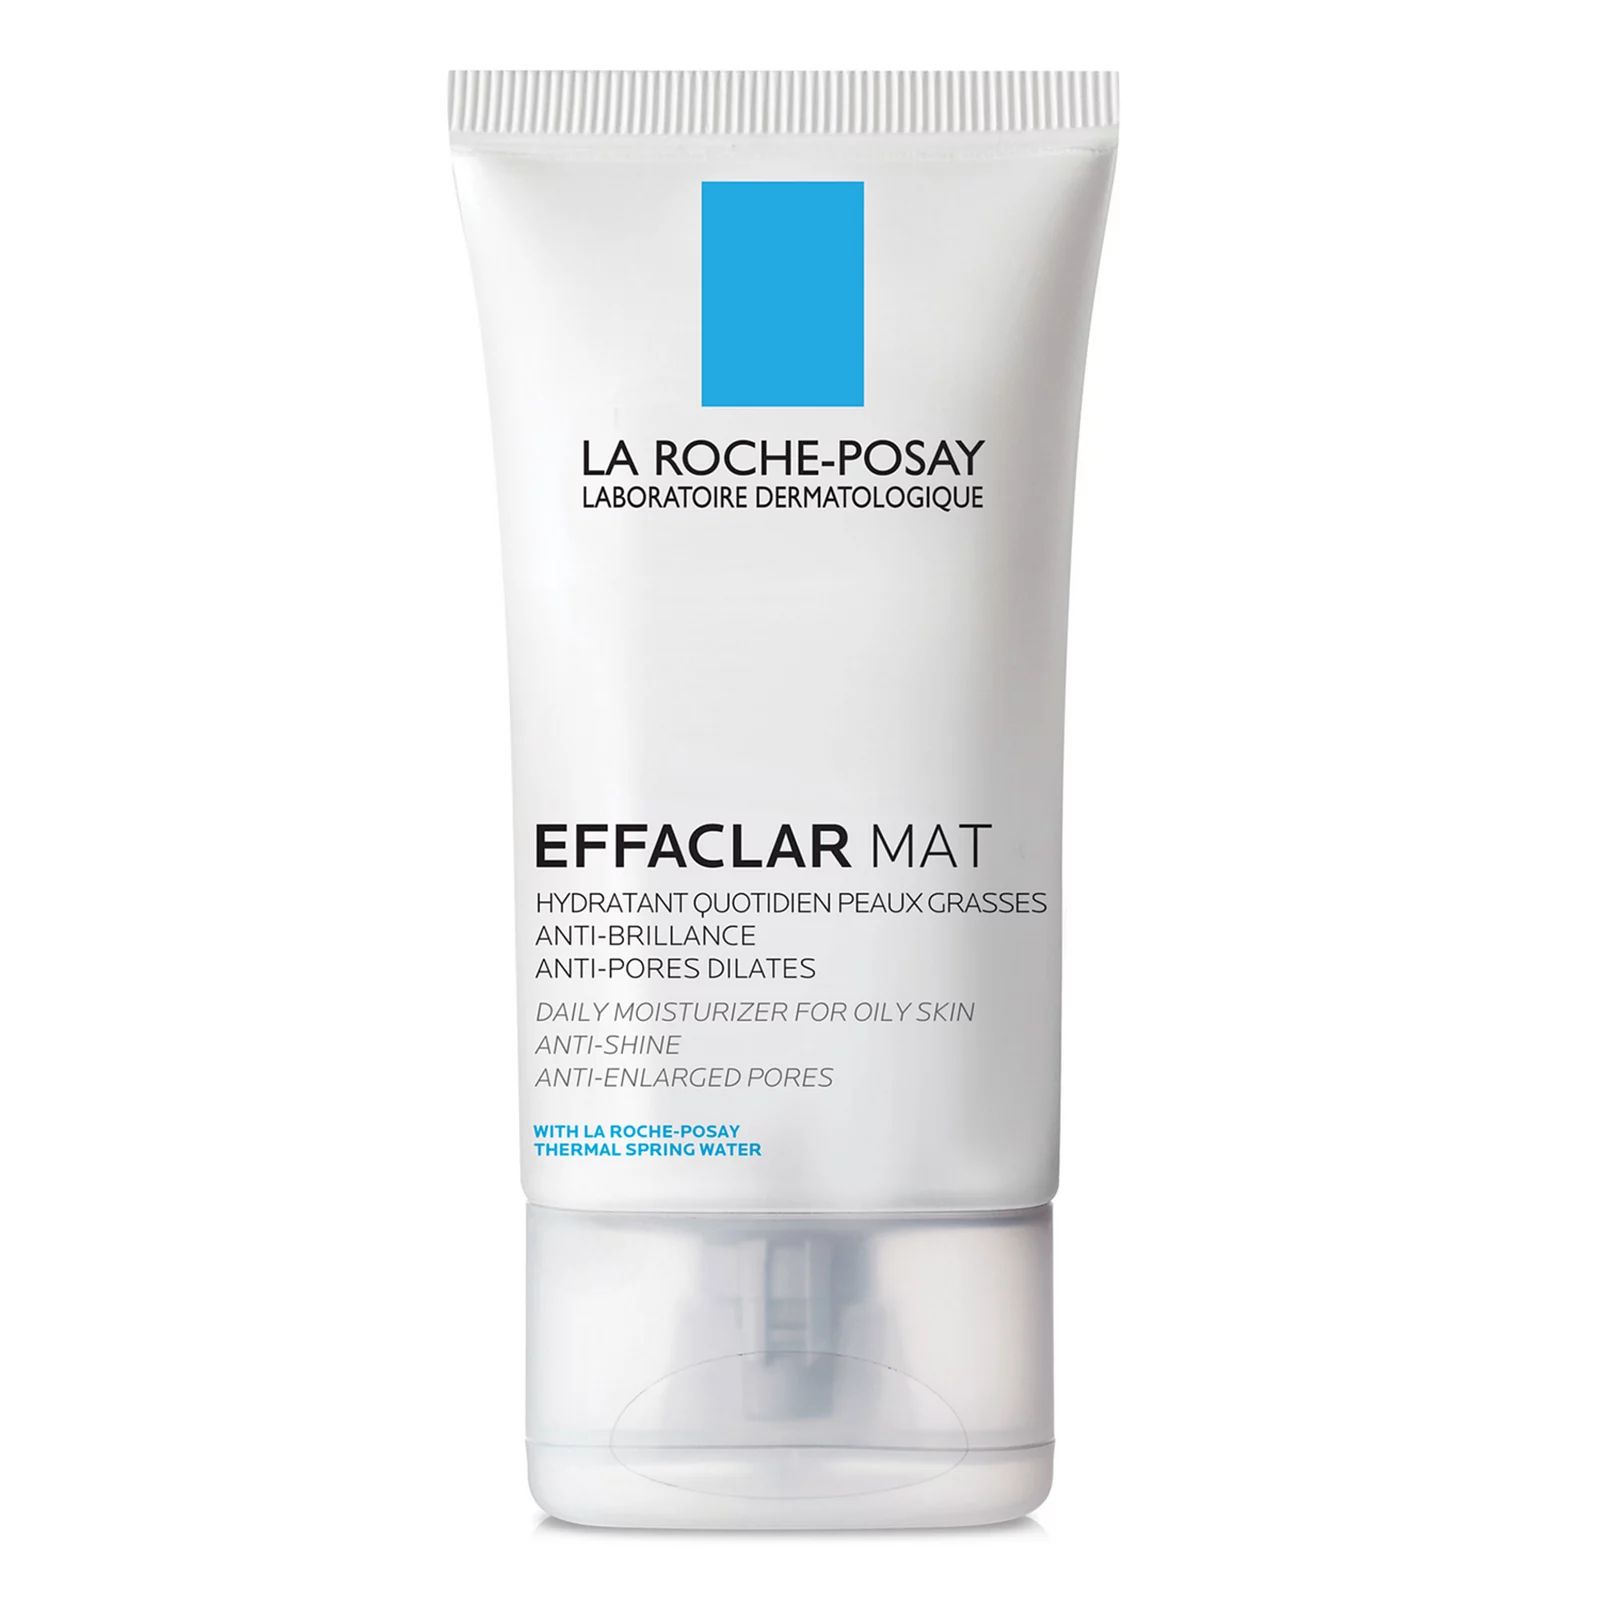 La Roche-Posay Effaclar Mat Daily Face Moisturizer for Oily Skin | Kohl's